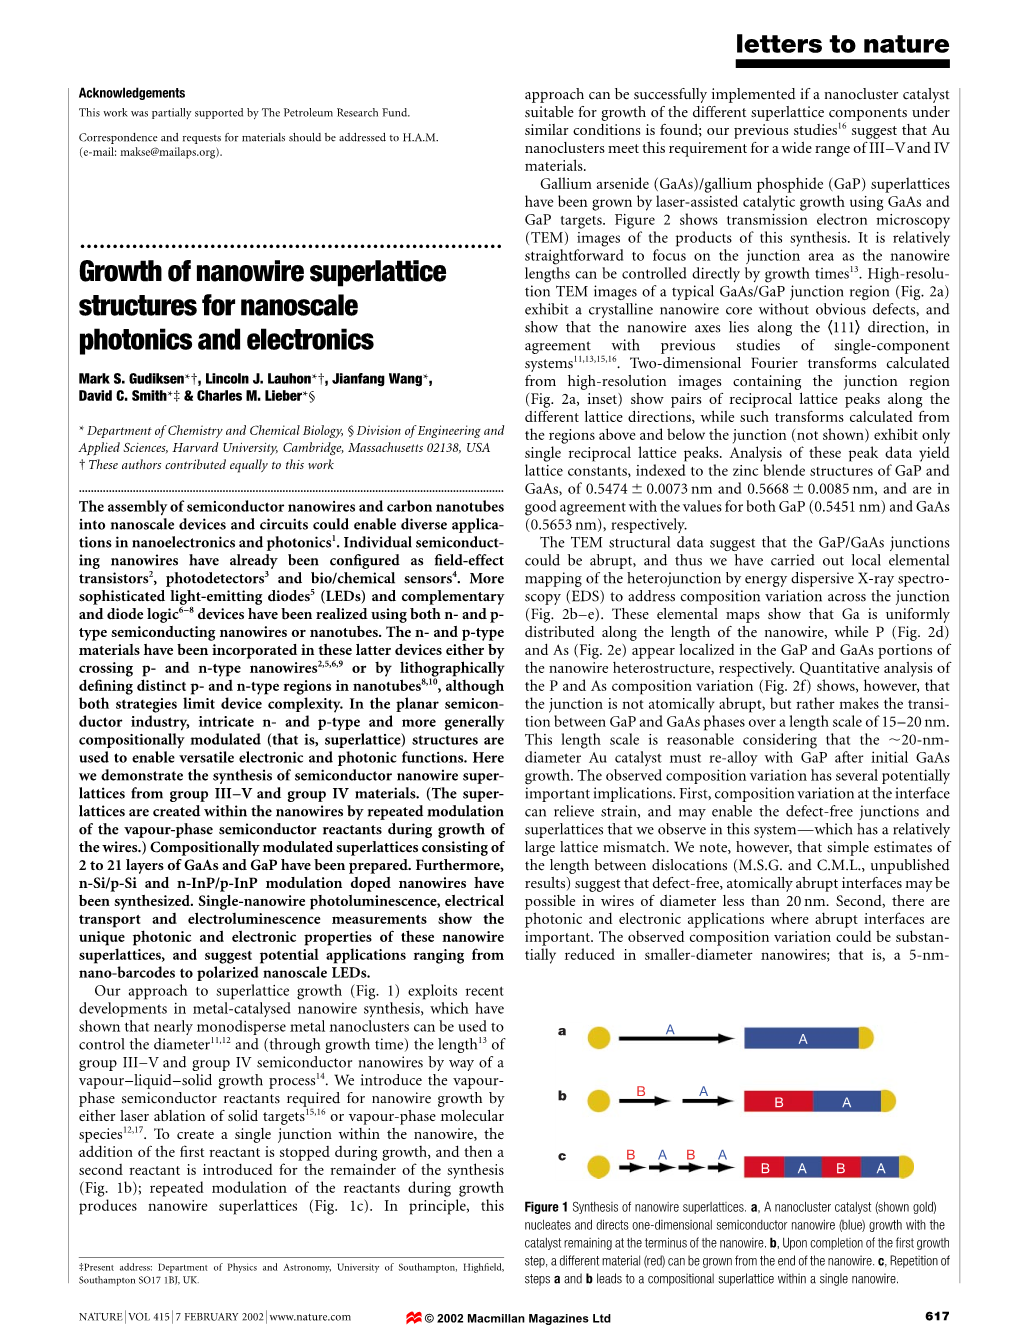 Growth of Nanowire Superlattice Structures for Nanoscale Photonics